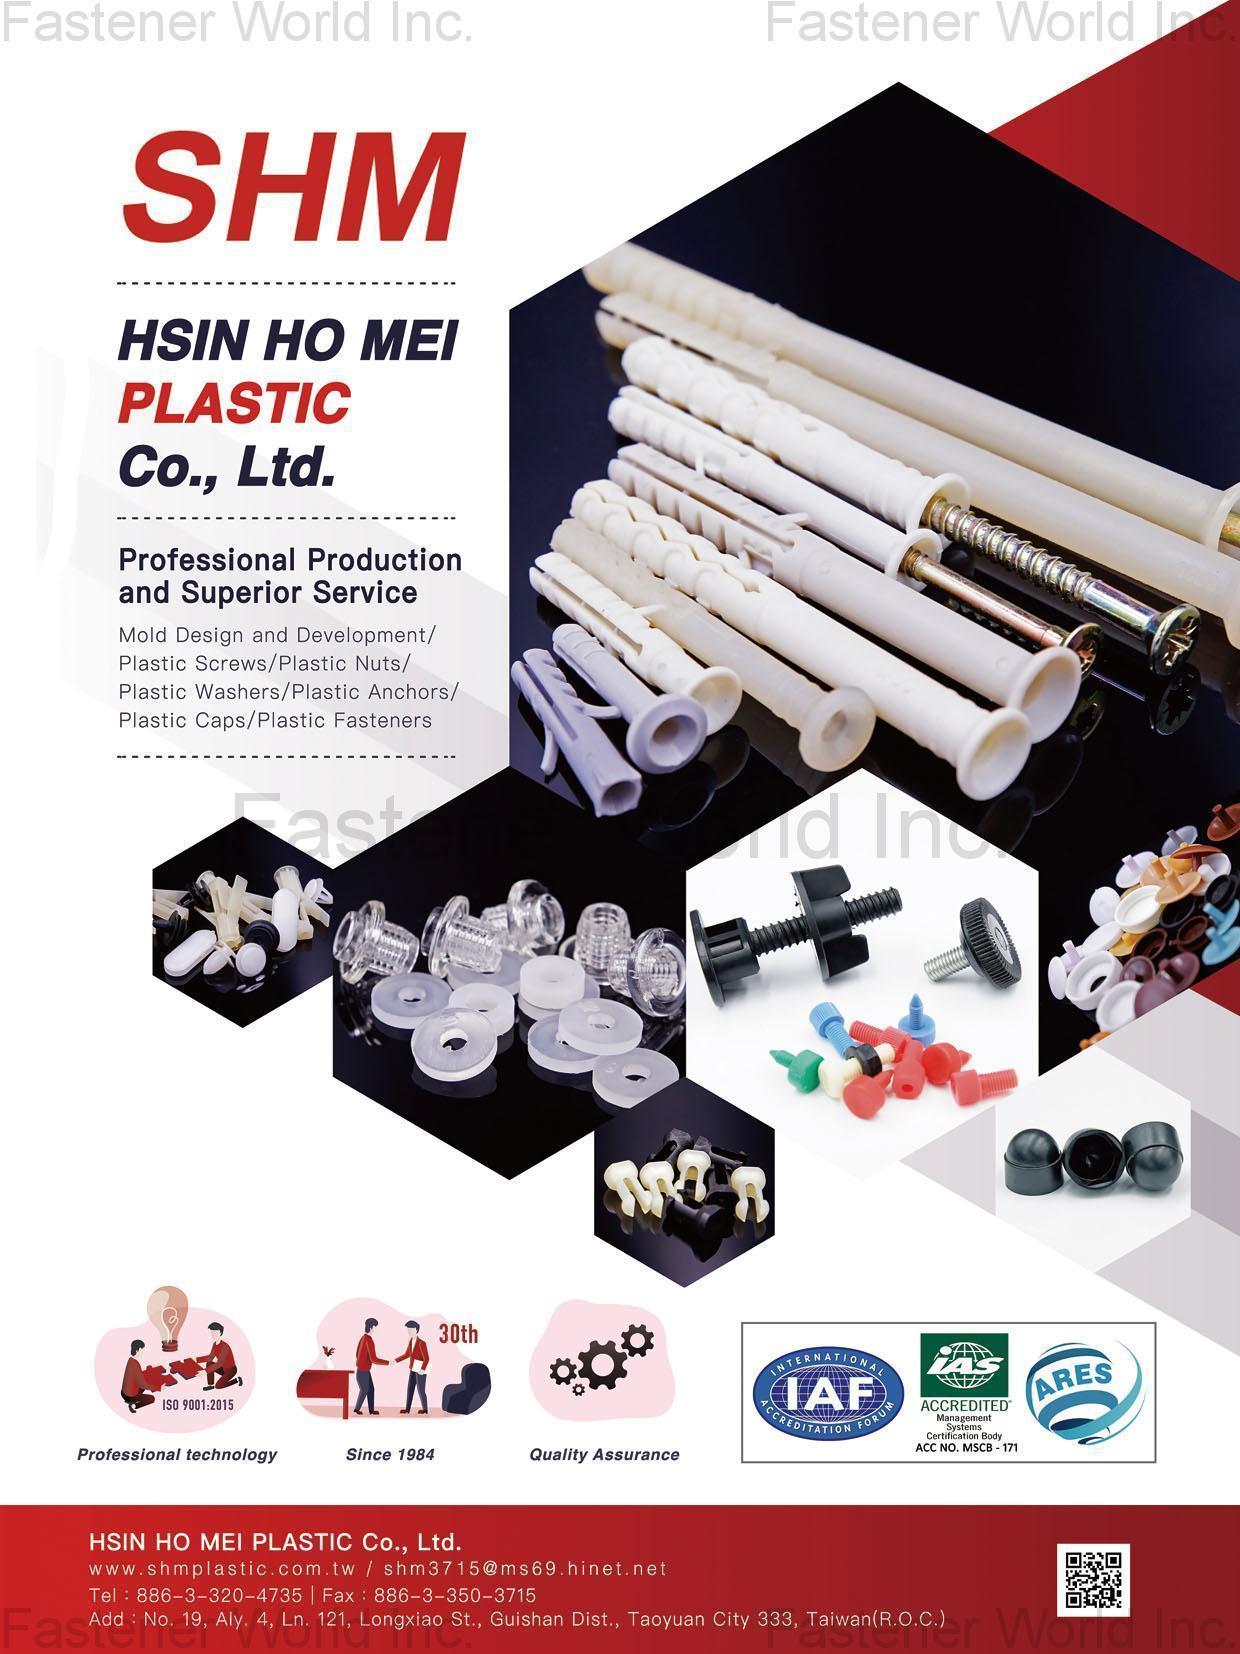 HSIN HO MEI PLASTIC CO., LTD. , Mold Design and Development, Plastic Screws, Plastic Nuts, Plastic Washers, Plastic Anchors, Plastic Caps, Plastic Fasteners , Plastic Screws